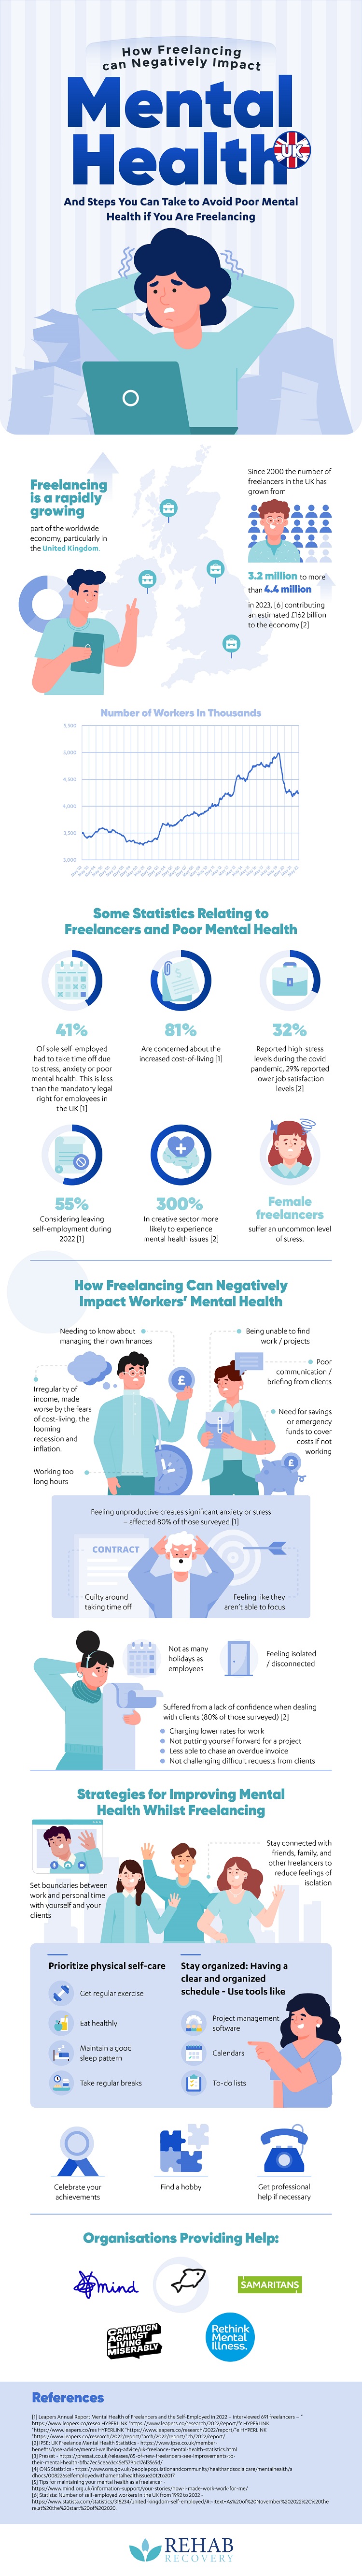 freelancer mental health infographic